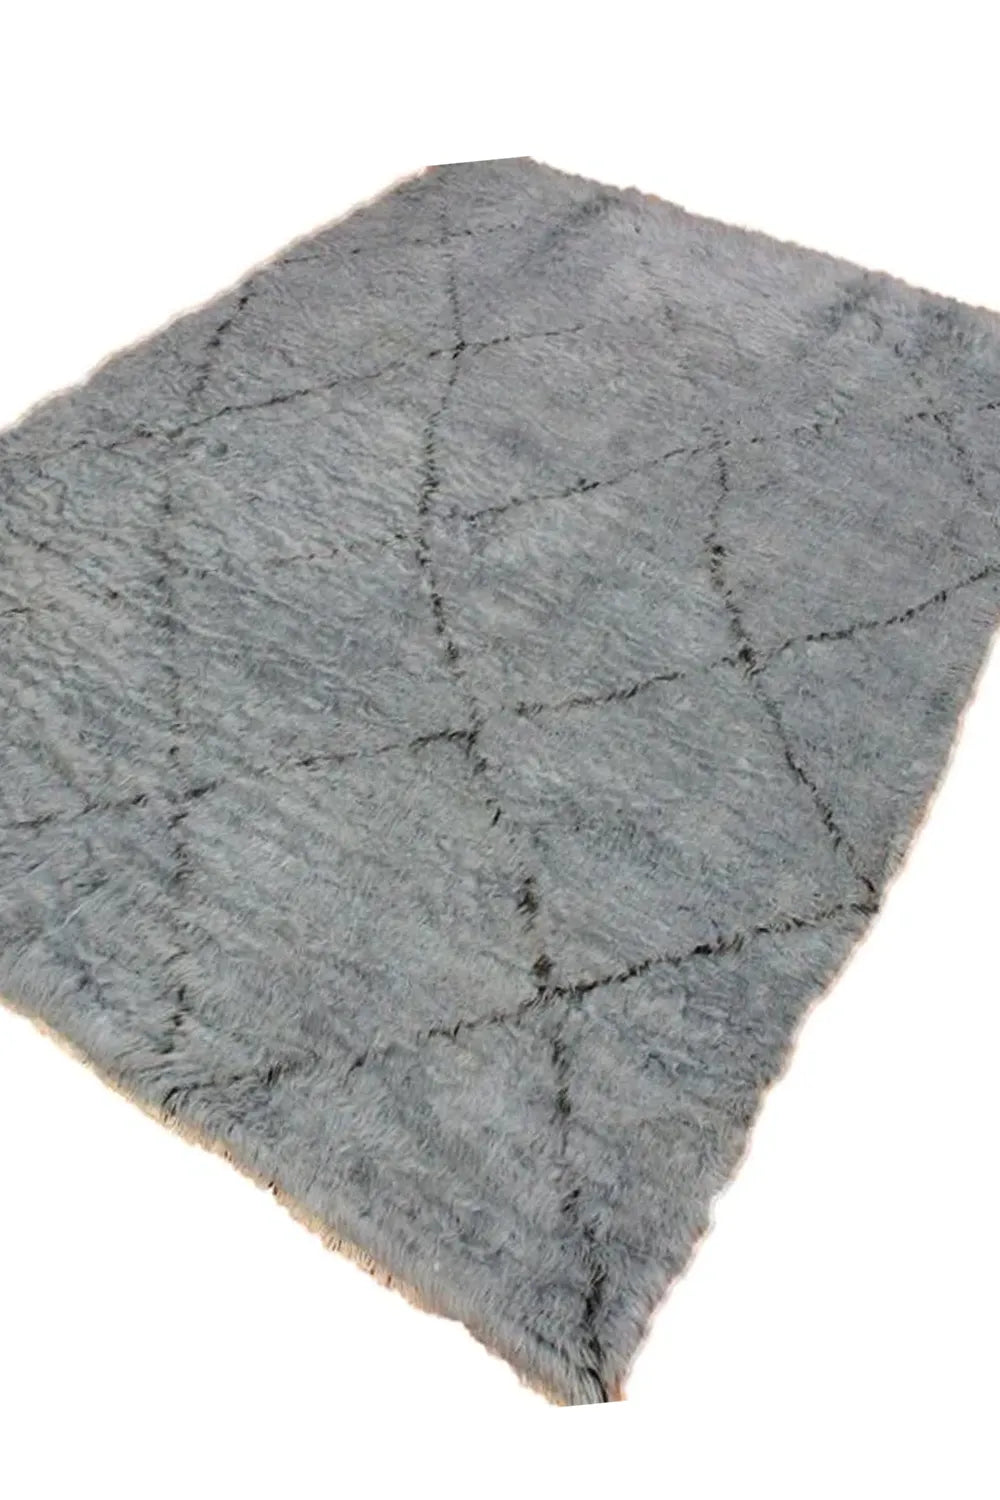 Gray shag rug with a plush pile and large dark gray diamond design.